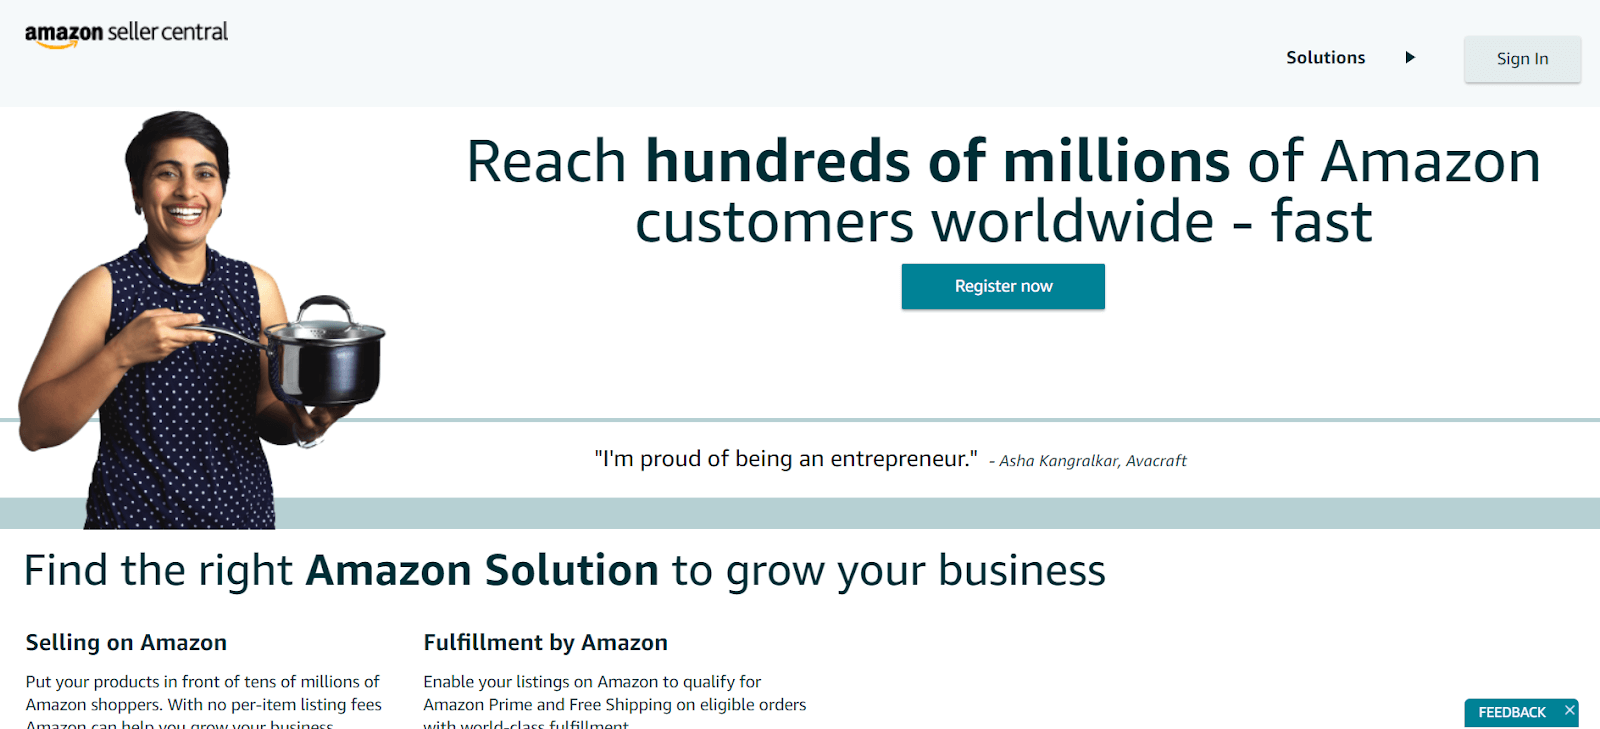 Amazon-Seller-Central-Ecommerce-Platforms